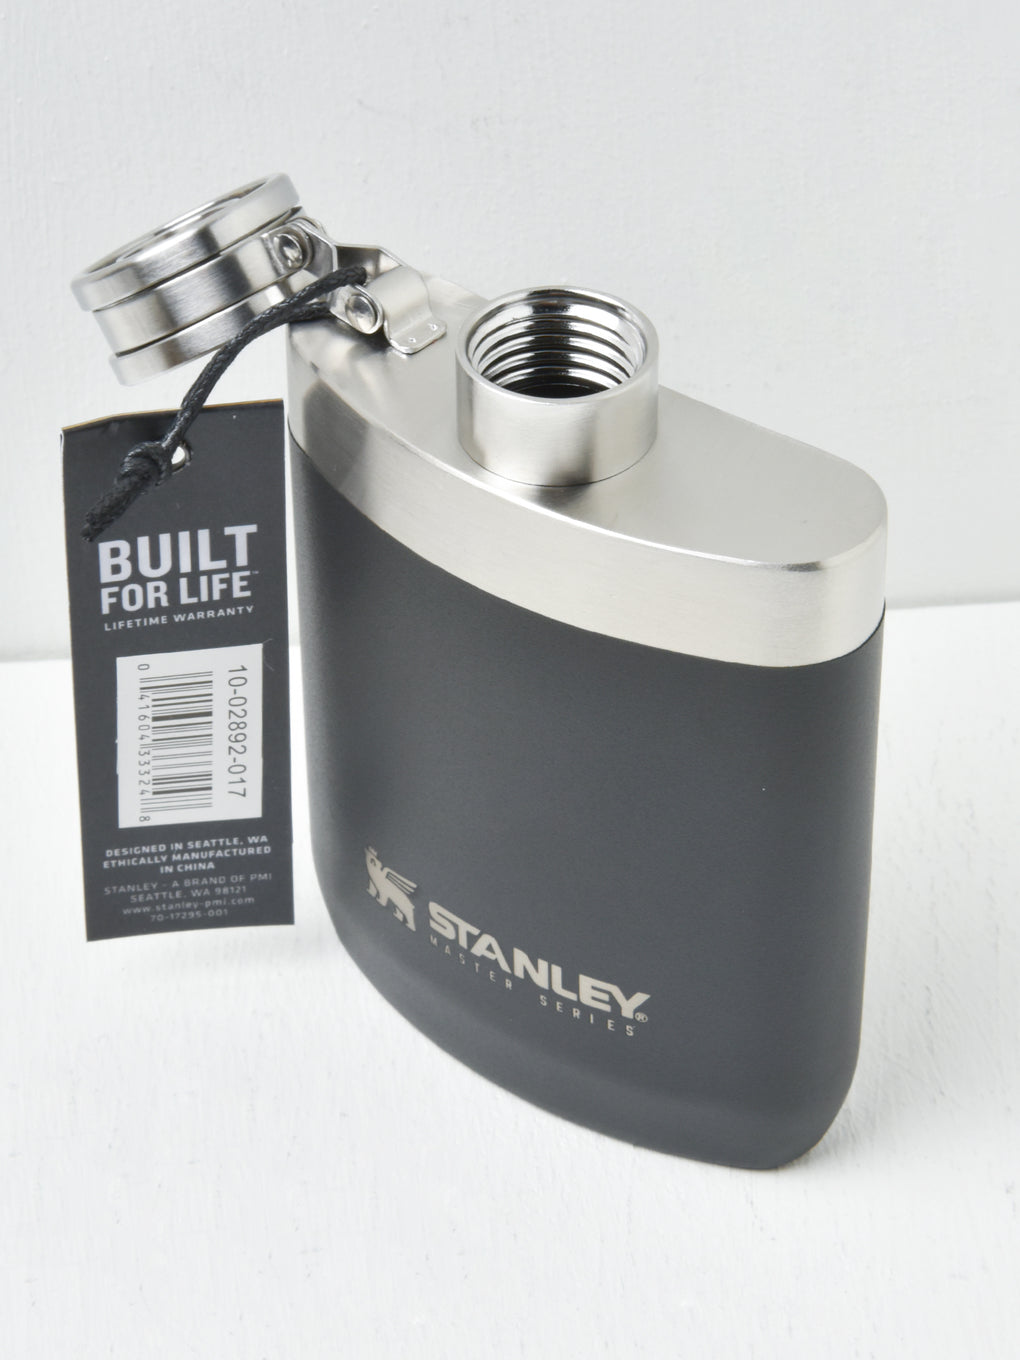 Stanley Master Unbreakable Hip Flask 